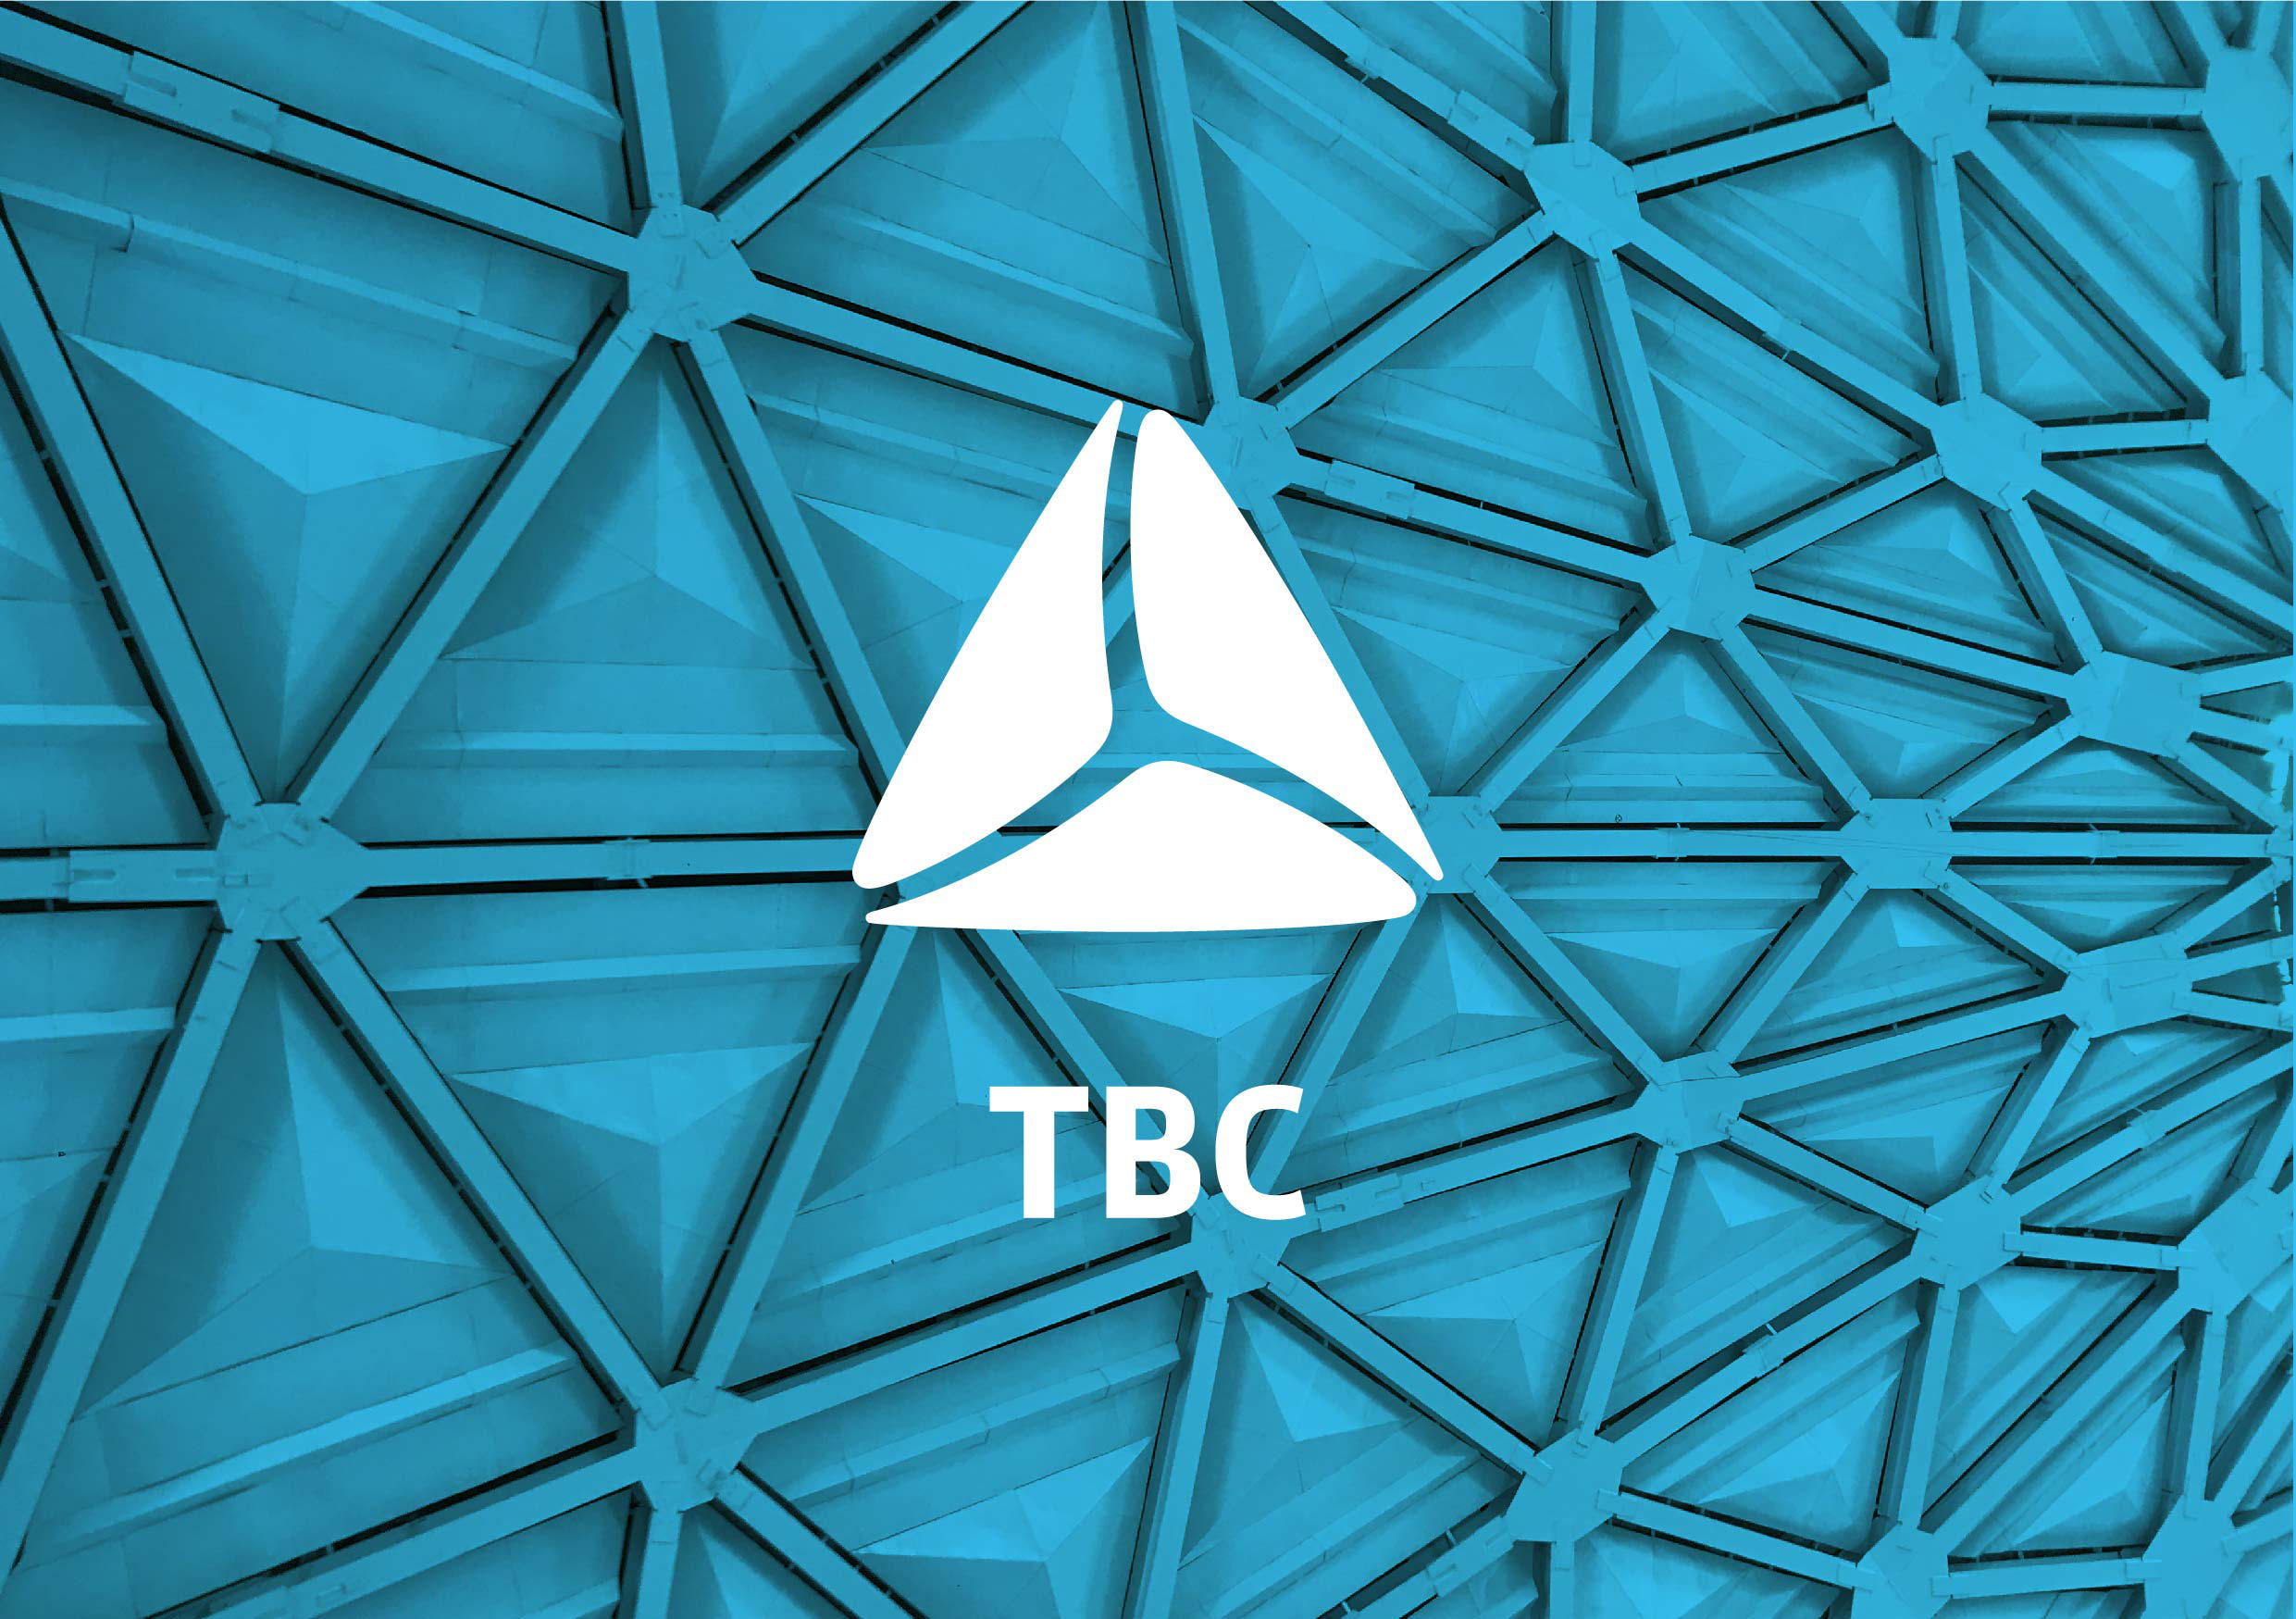 Tvs bank. TBC банк Узбекистан. TBC банк Грузия. ТВС банк. Логотип TBC банка.